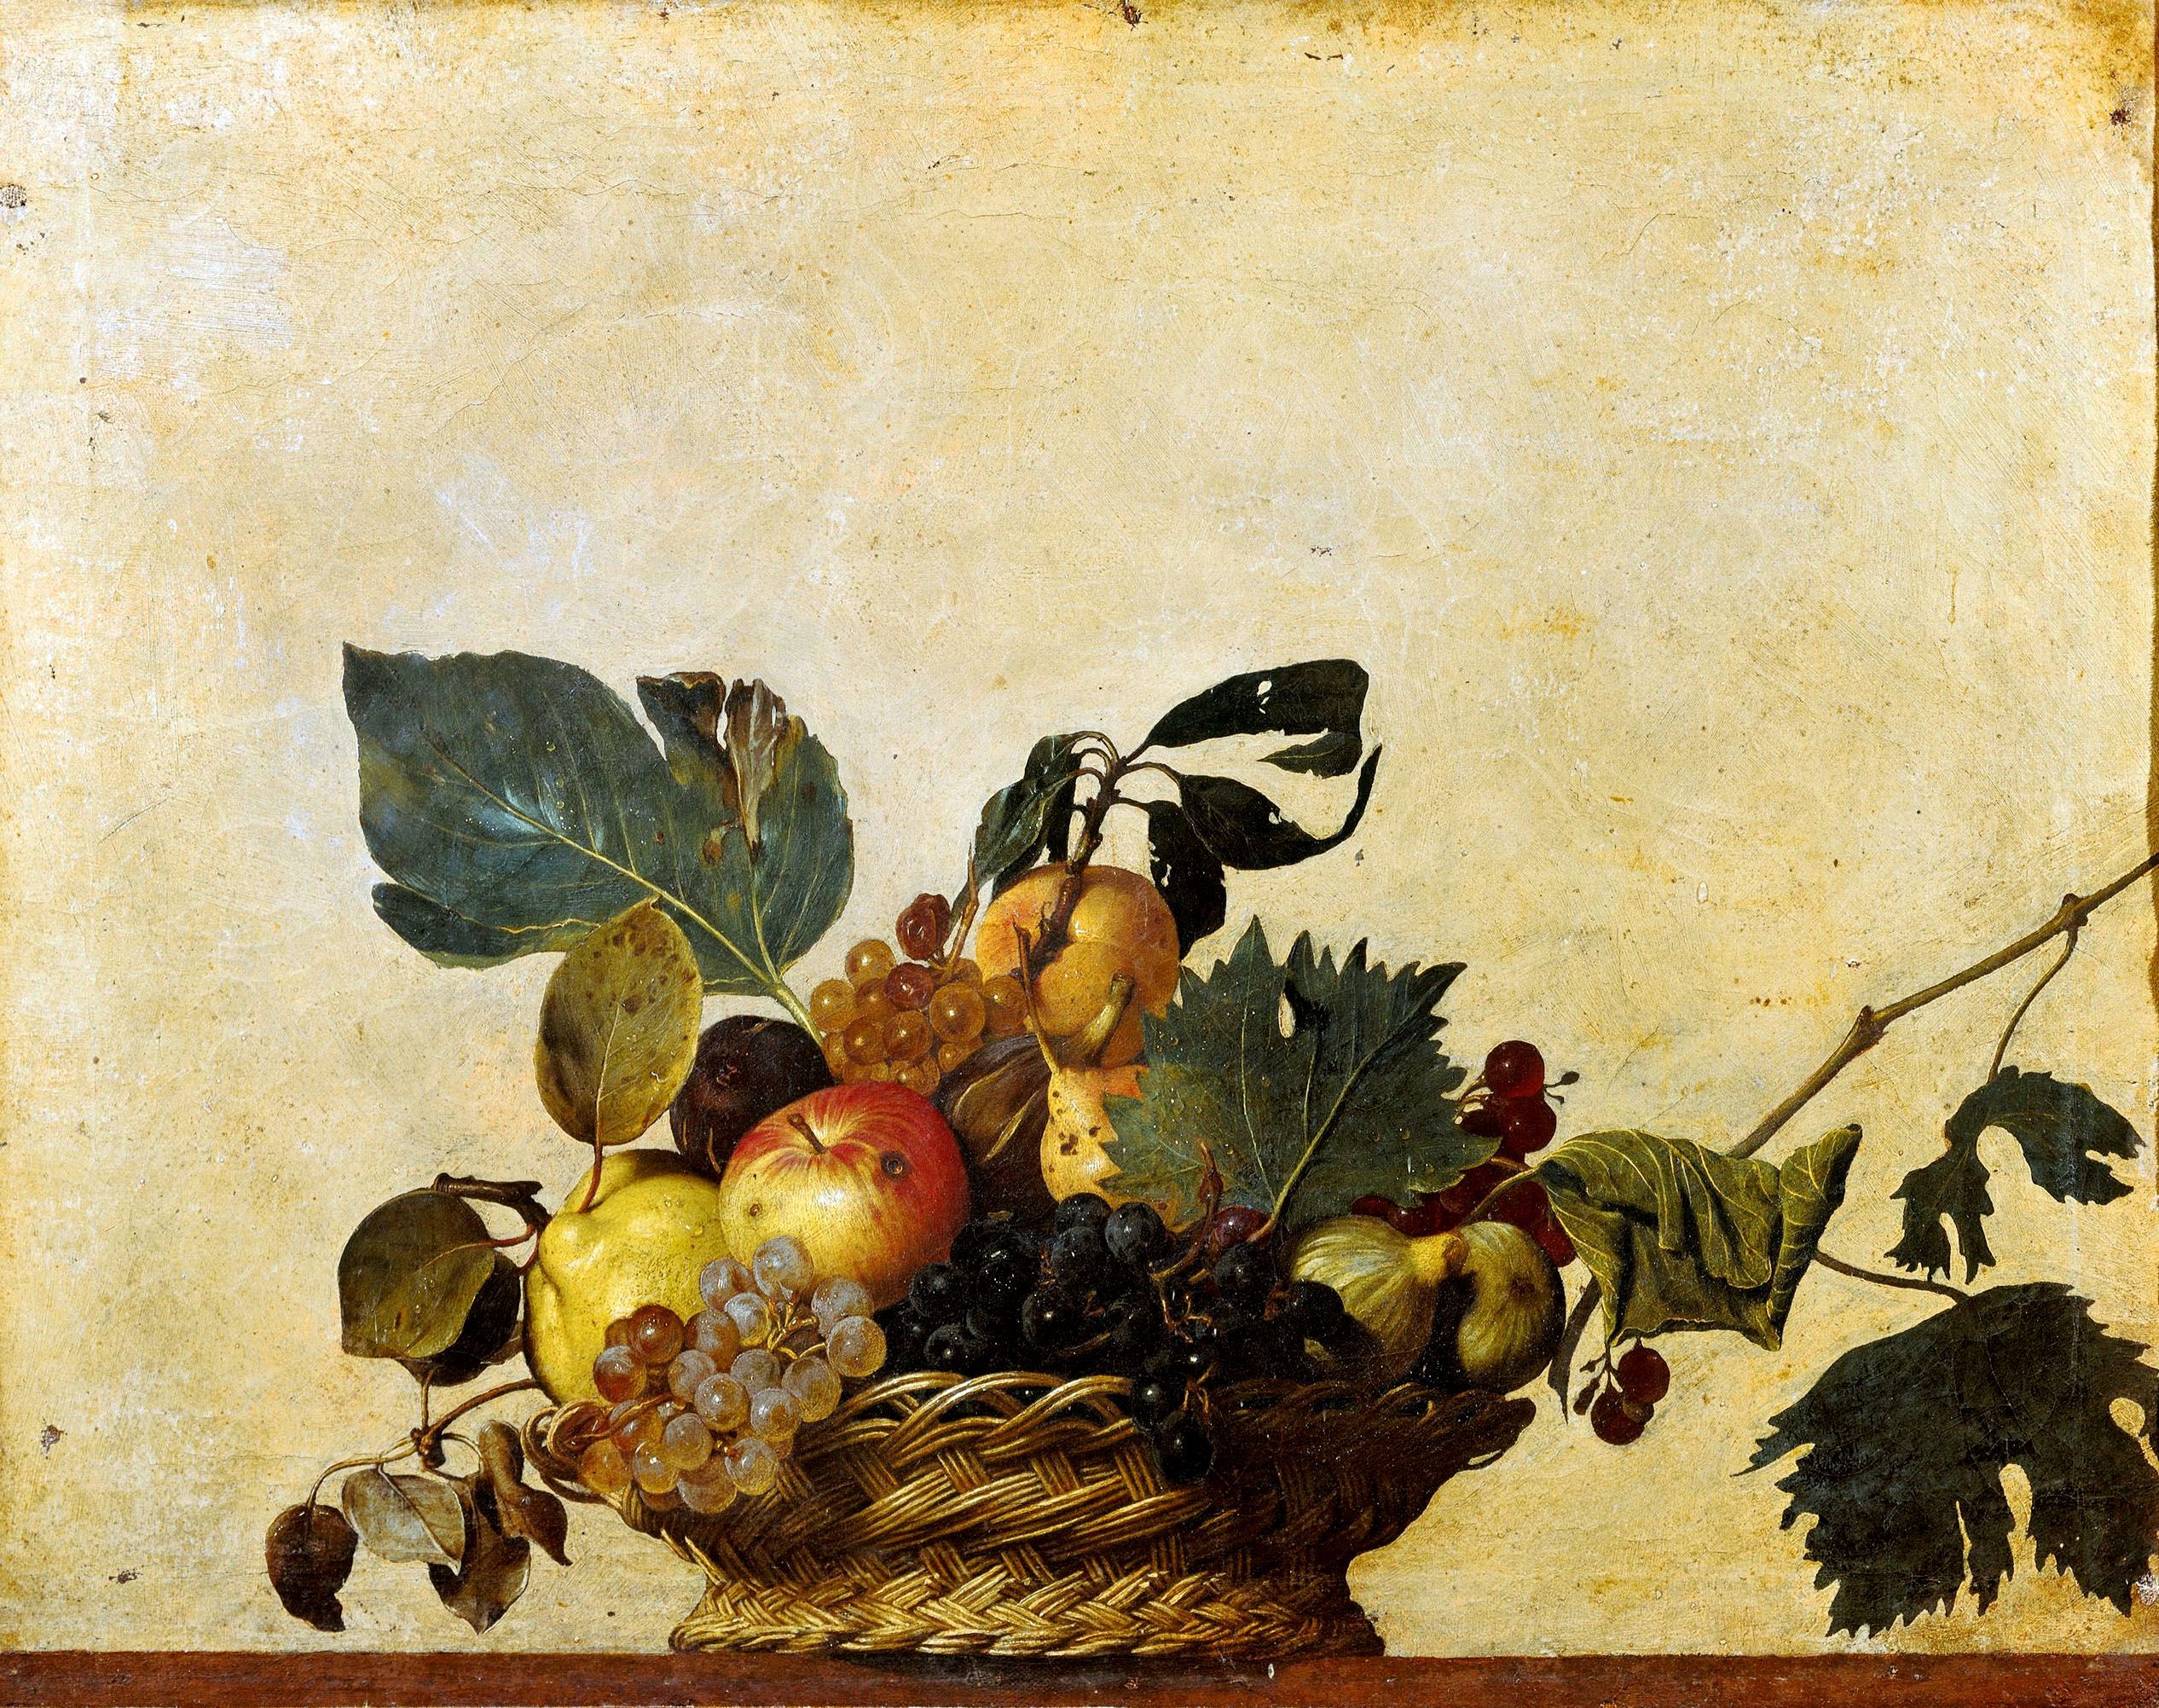 Basket of Fruit (Caravaggio) - Wikipedia